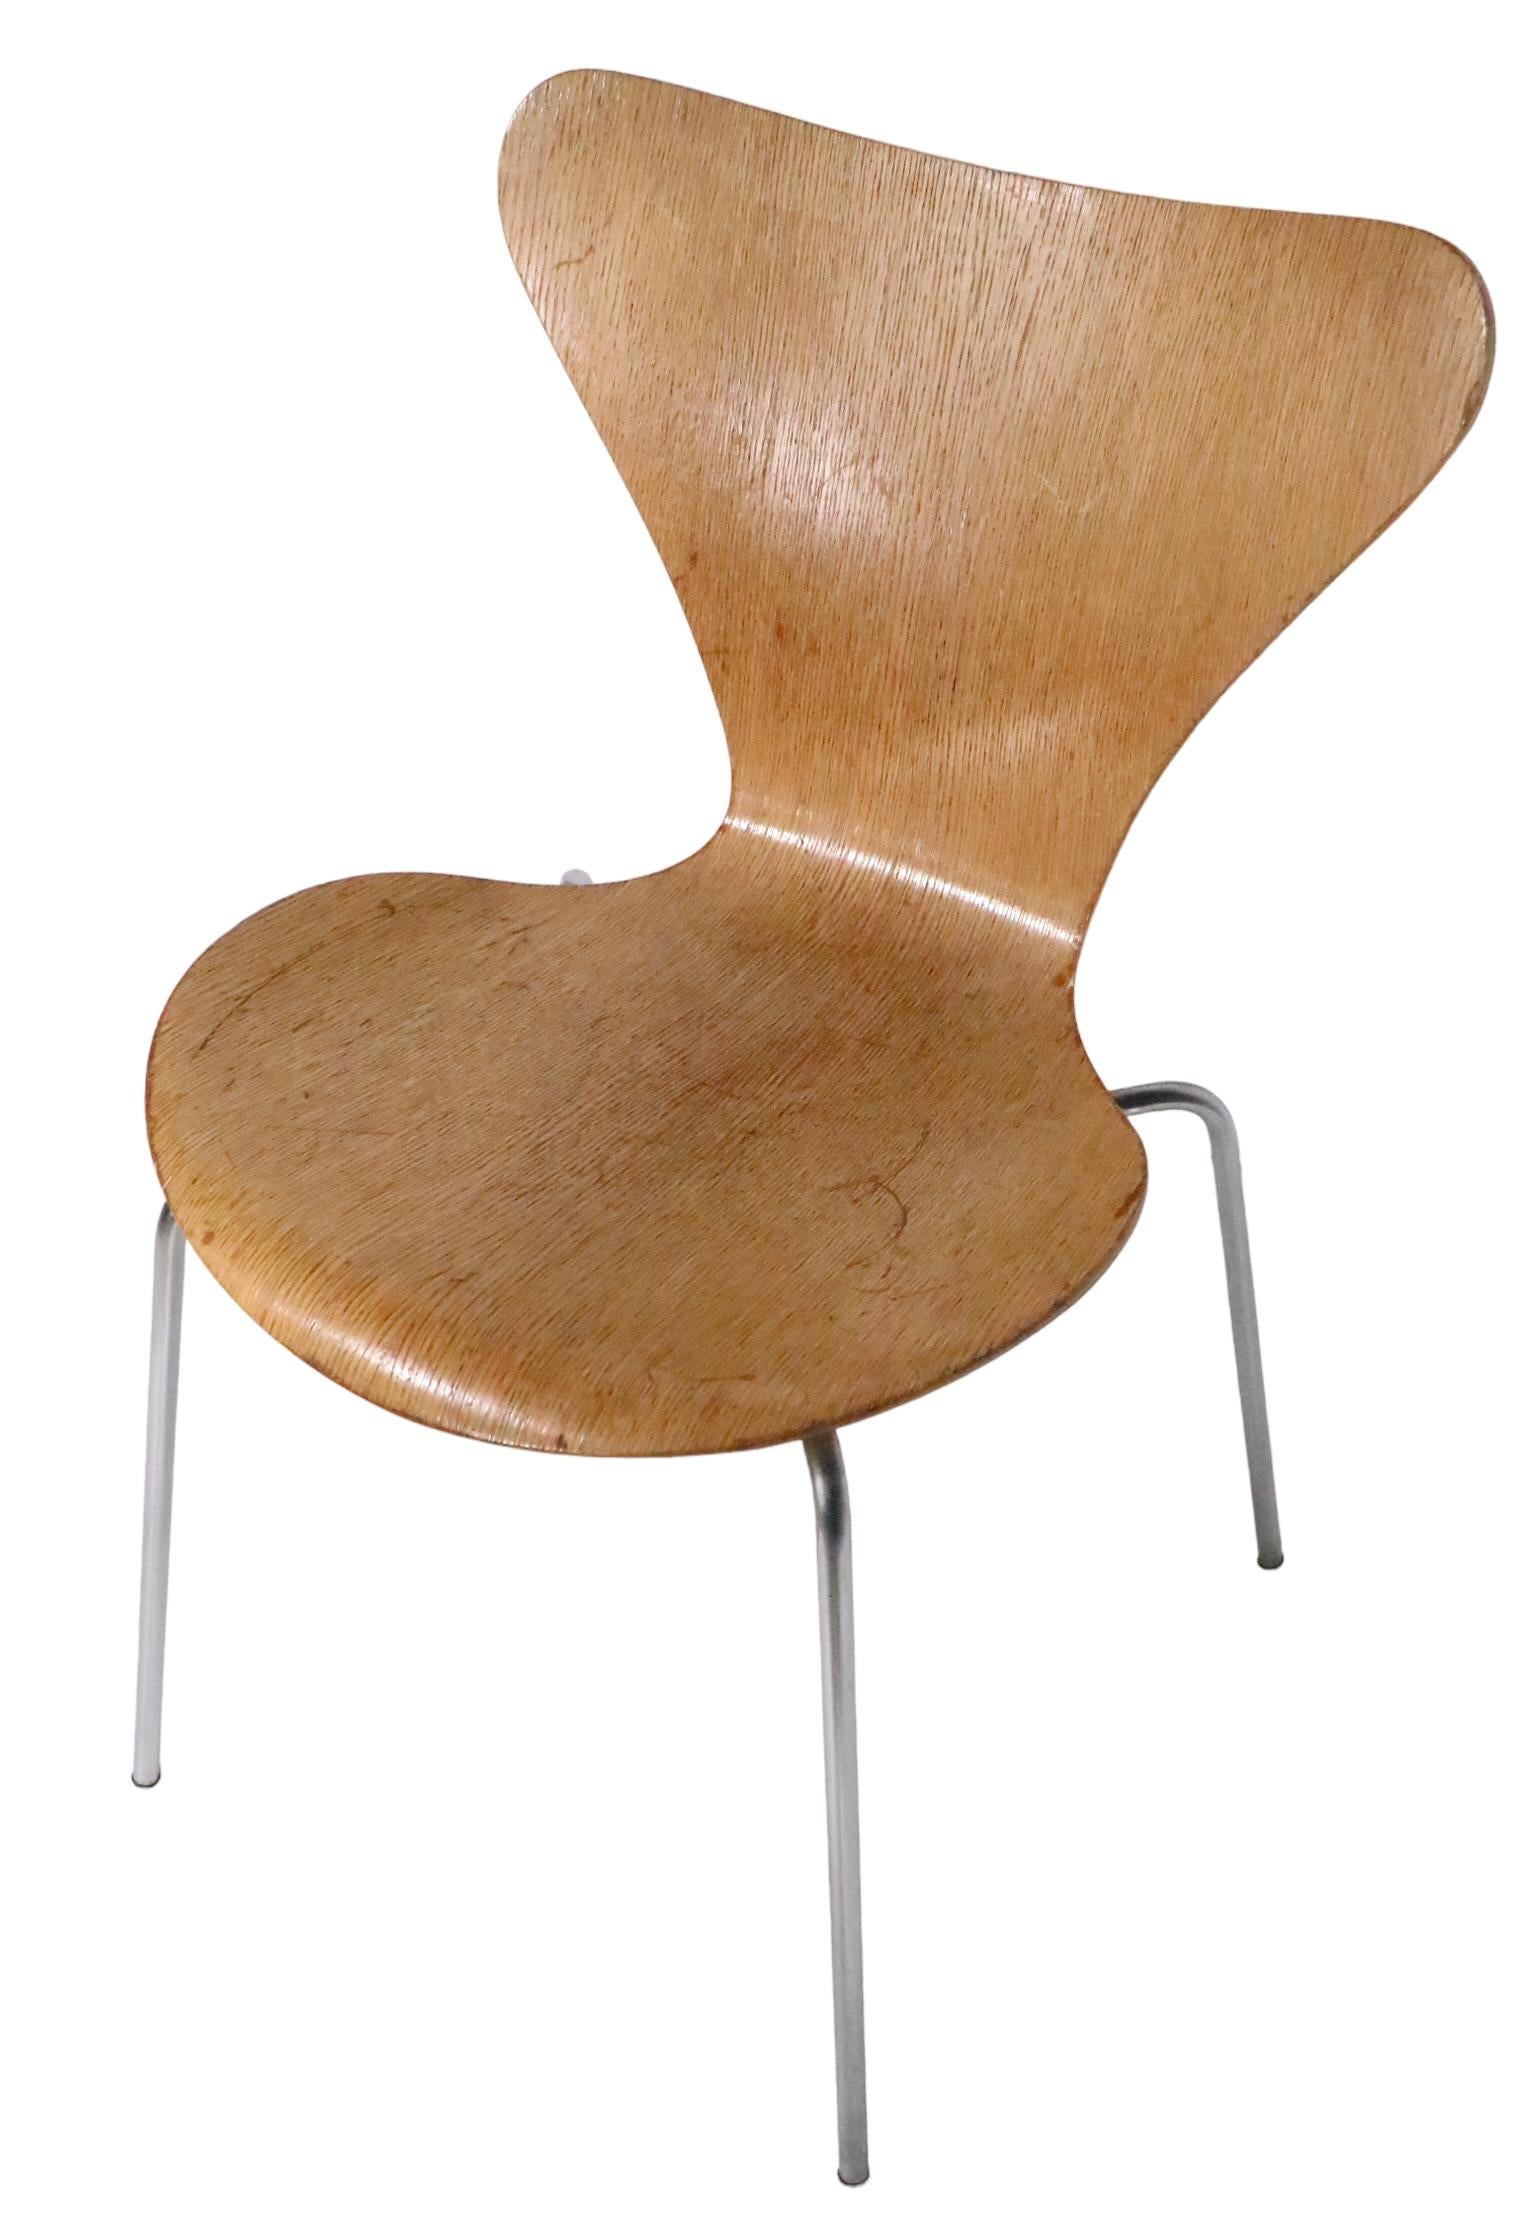 Arne Jacobsen Fritz Hansen Series 7 Butterfly Chair in Oak Veneer, circa 1960s For Sale 2